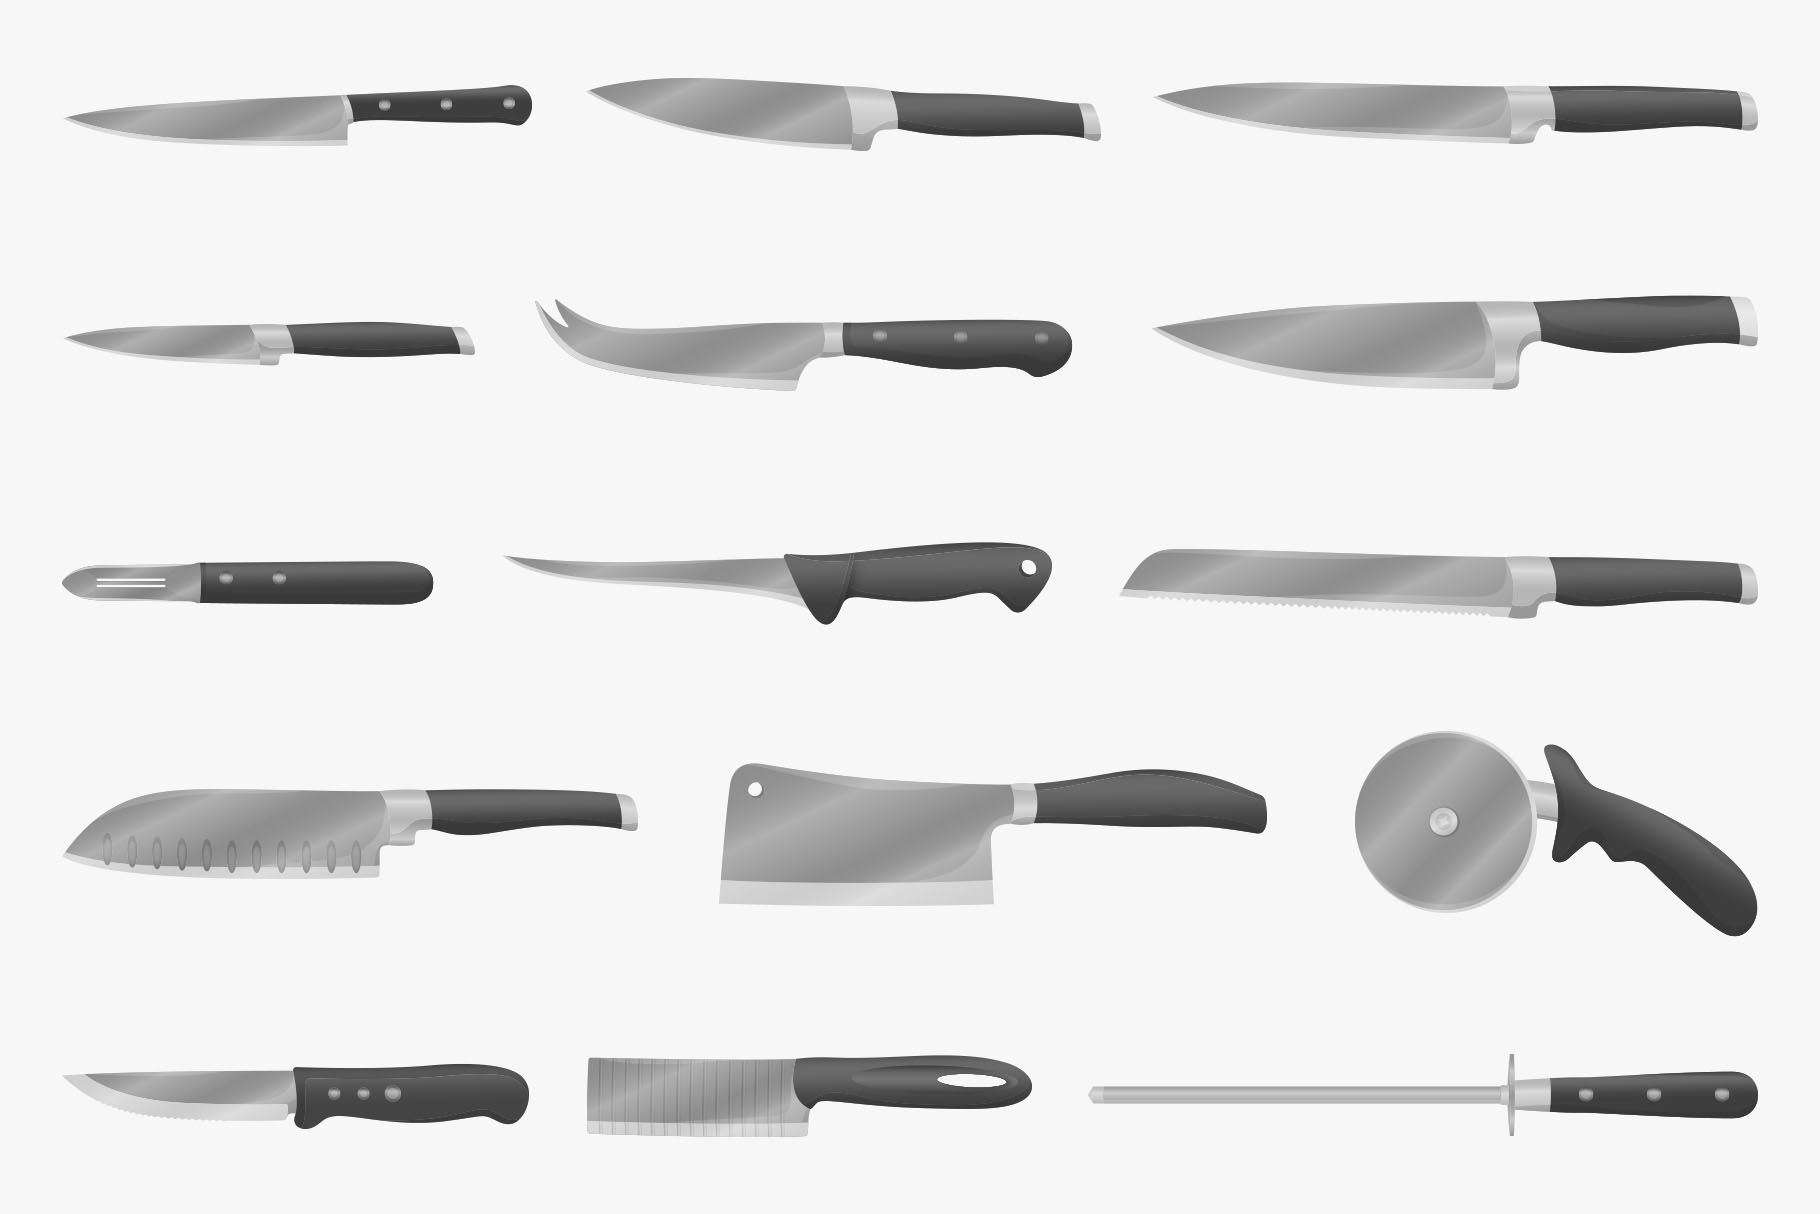 Knife Illustrations (AI, EPS, PNG Format)